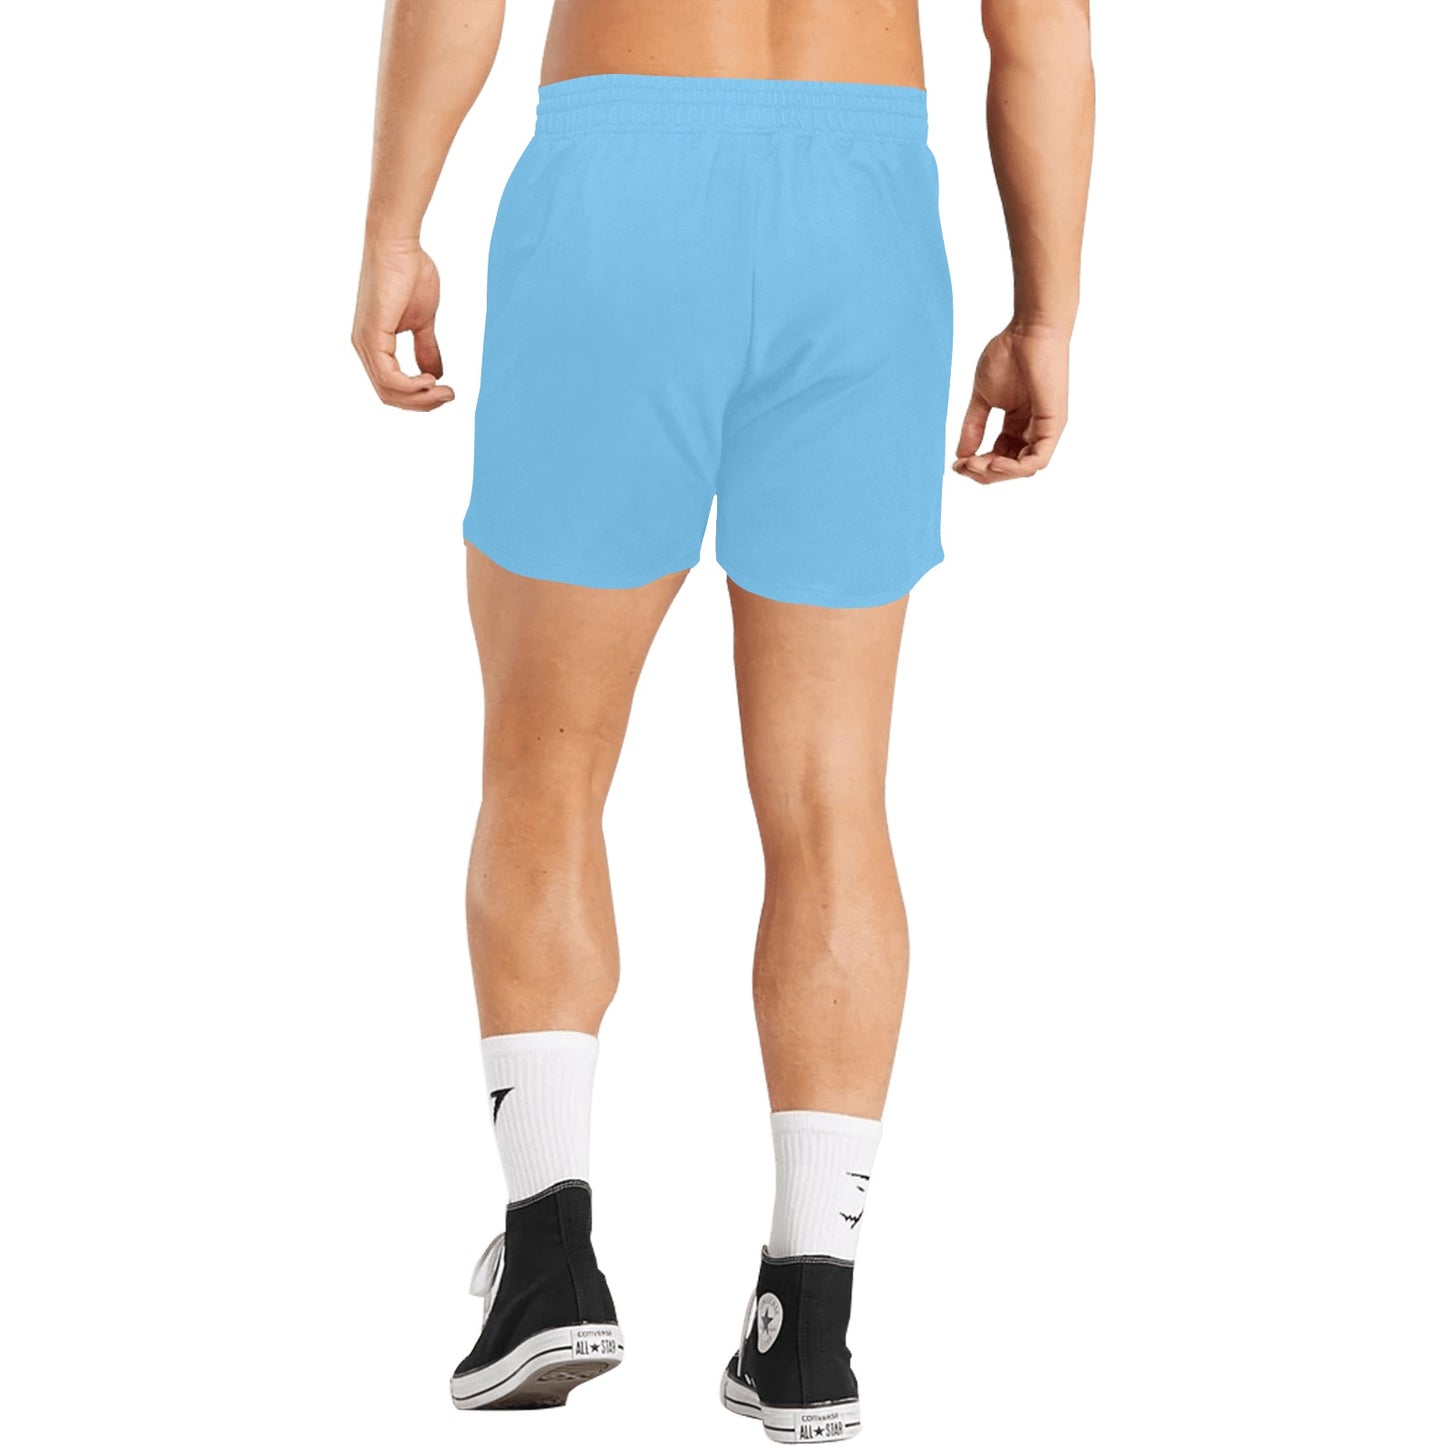 Duntalk "Streetball" 5" Inch Mid-Length Shorts Blue